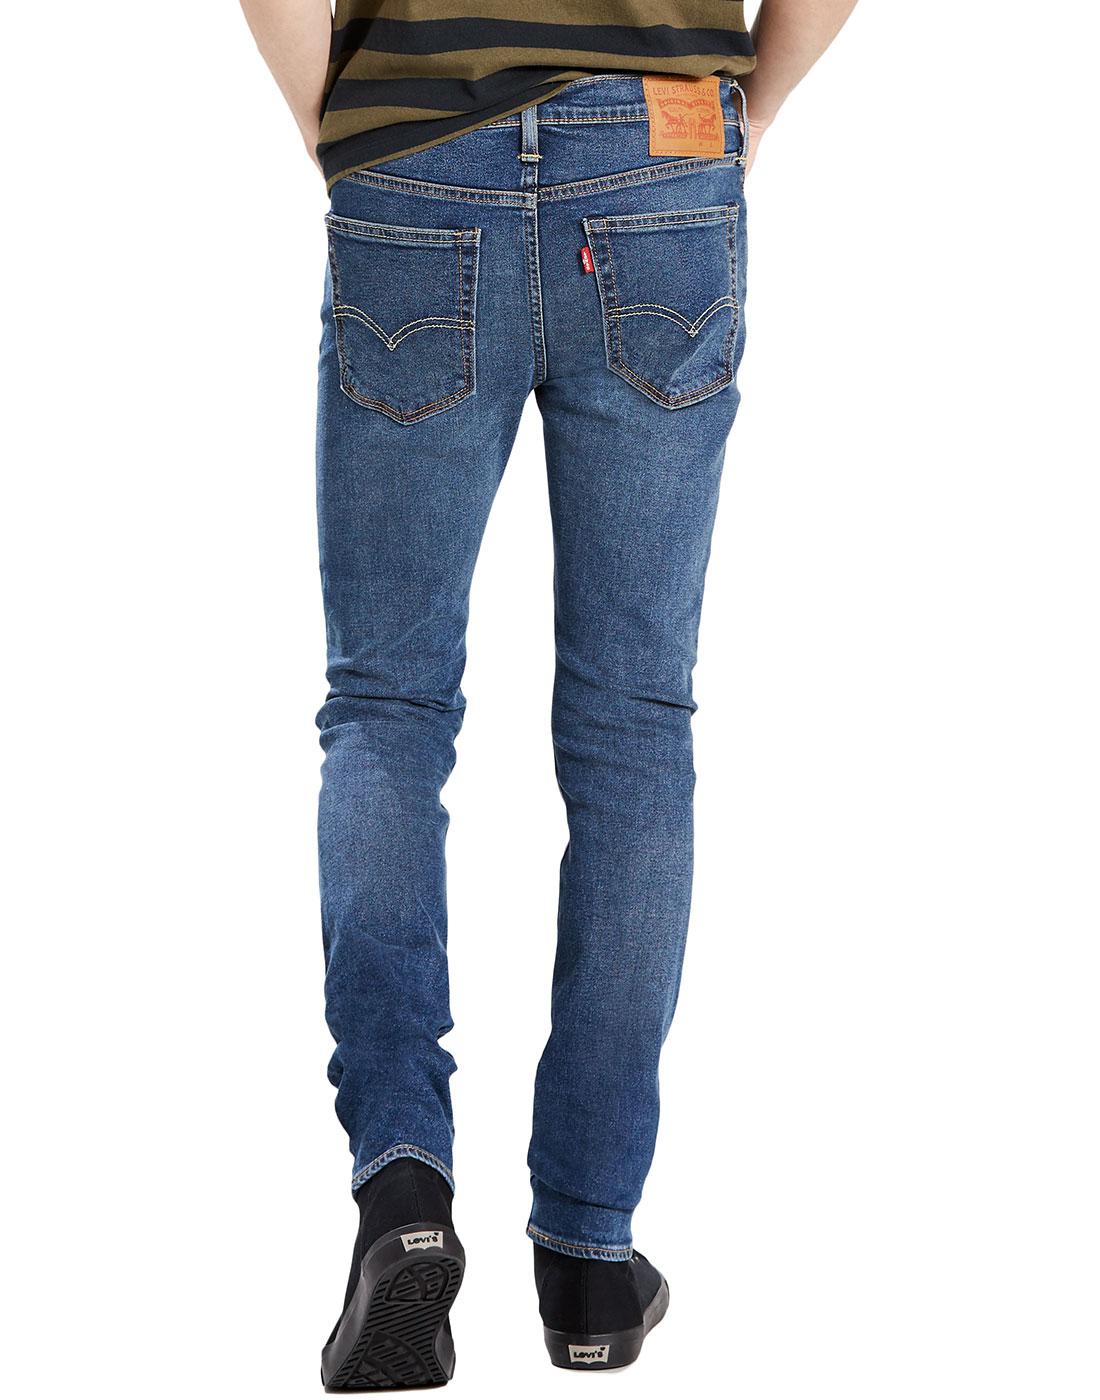 Levi S 519 Retro Mod Extreme Skinny Fit Denim Jeans Williamsburg